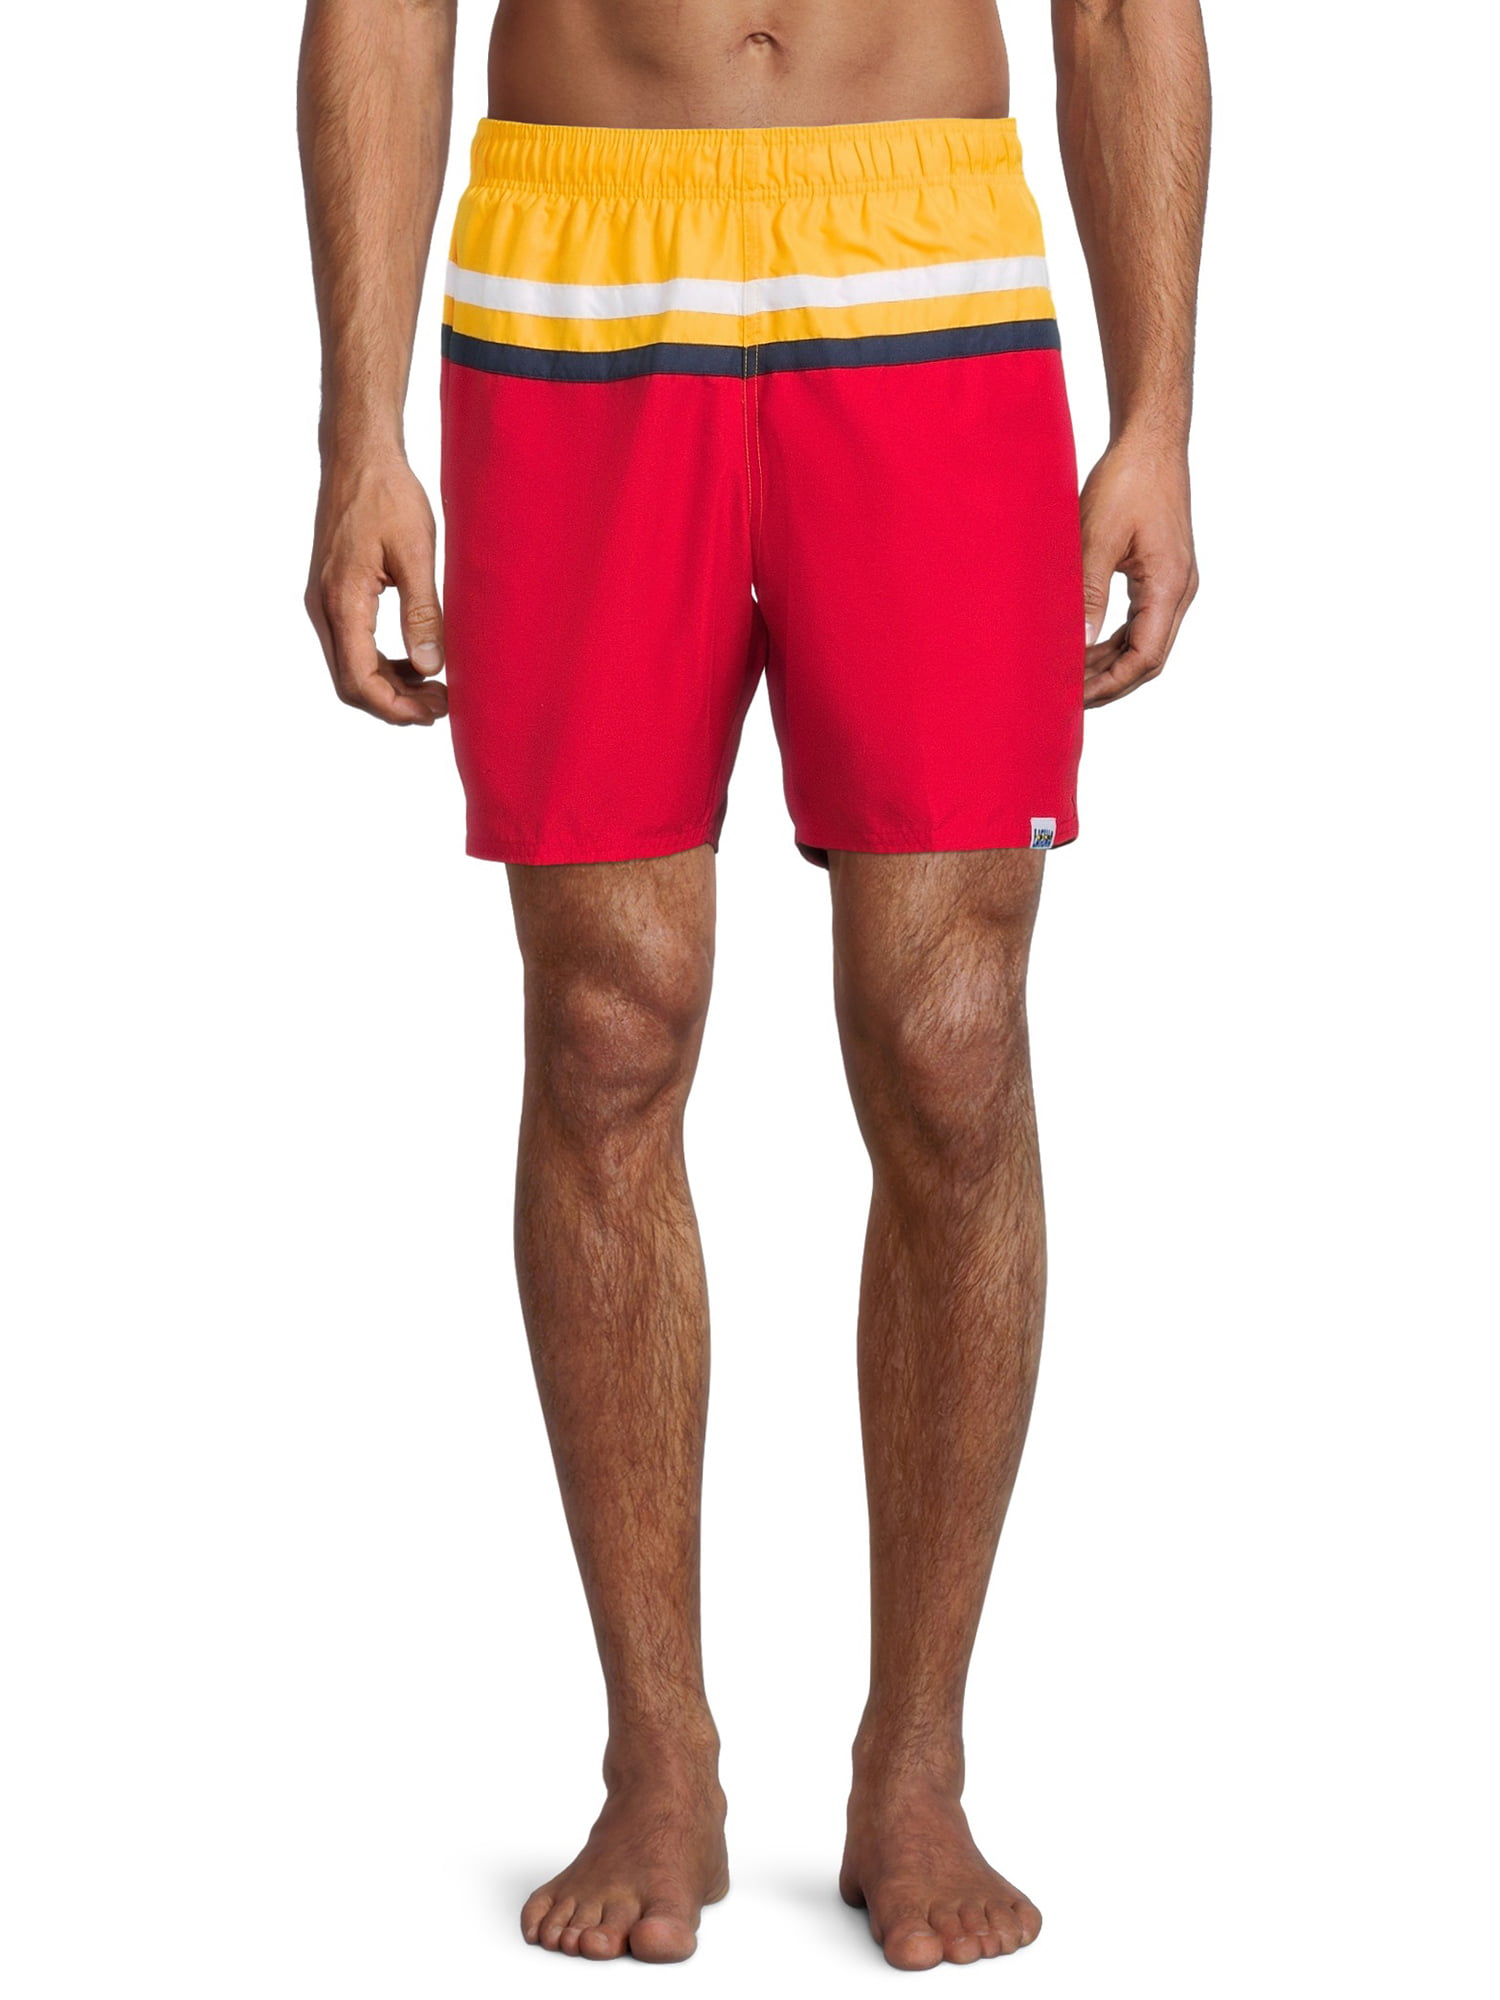 NWT Boys Laguna Board Shorts Swim Trunk Blue Striped Summer Beach Fun Water wear